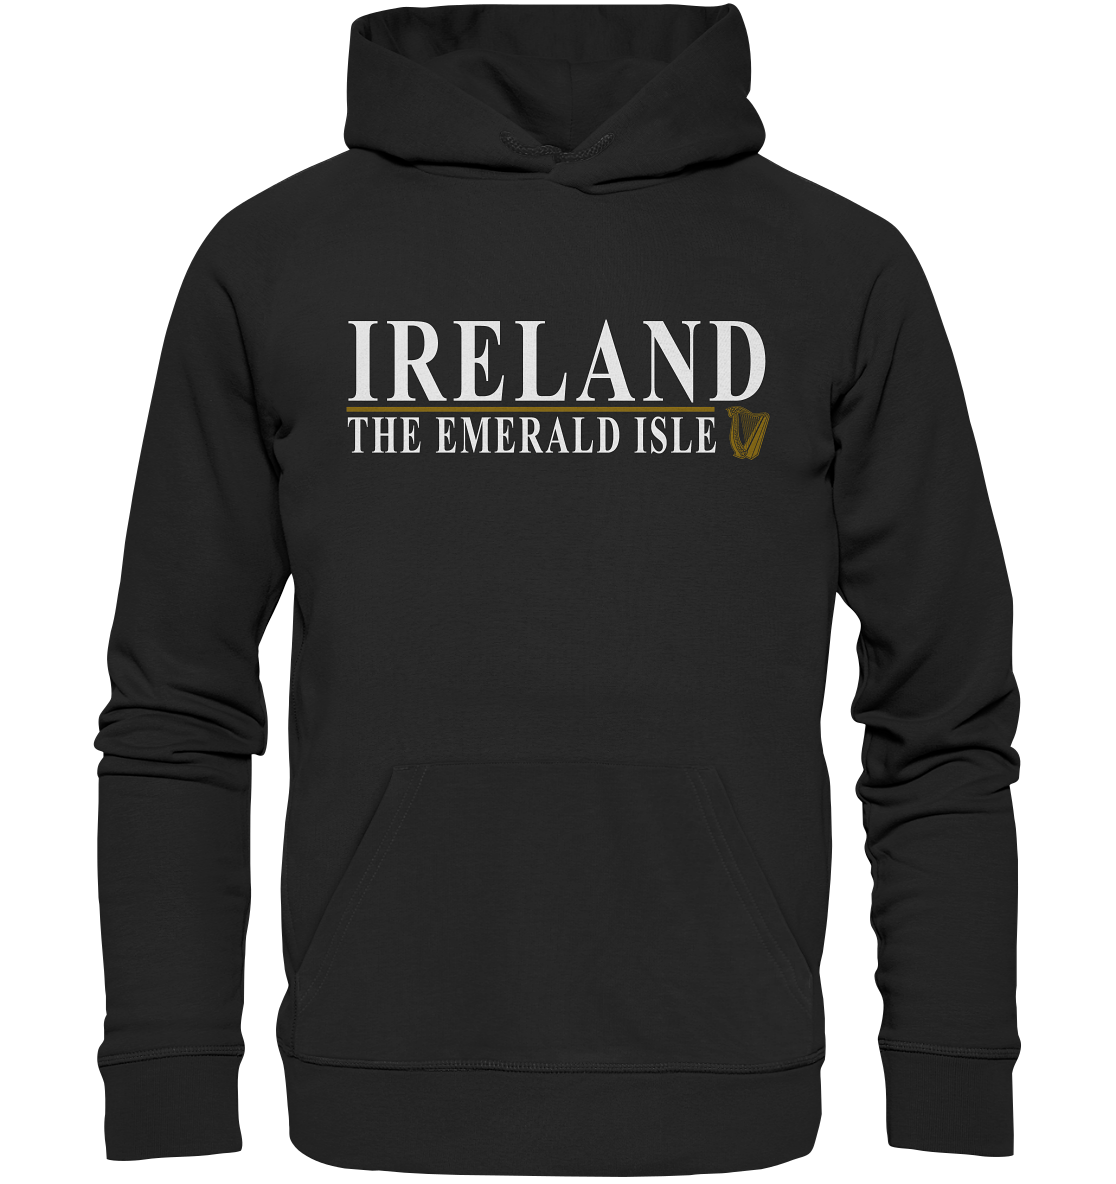 Ireland "The Emerald Isle" - Premium Unisex Hoodie